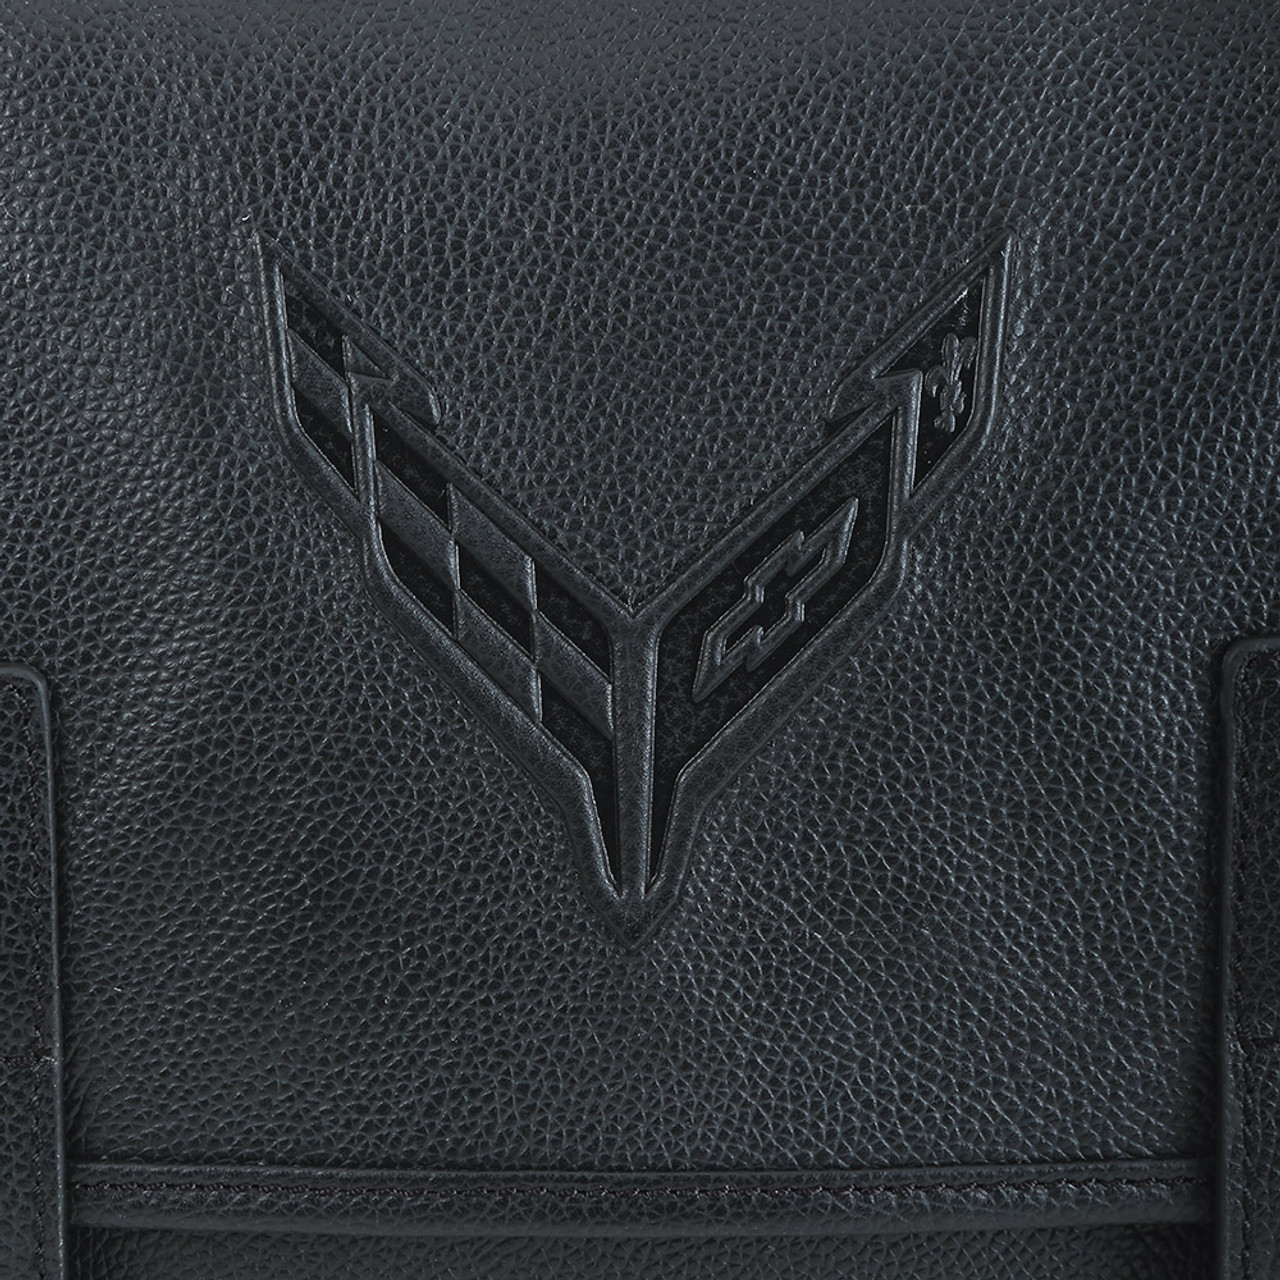 C8 Corvette Black Leather Back Pack (outer logo)